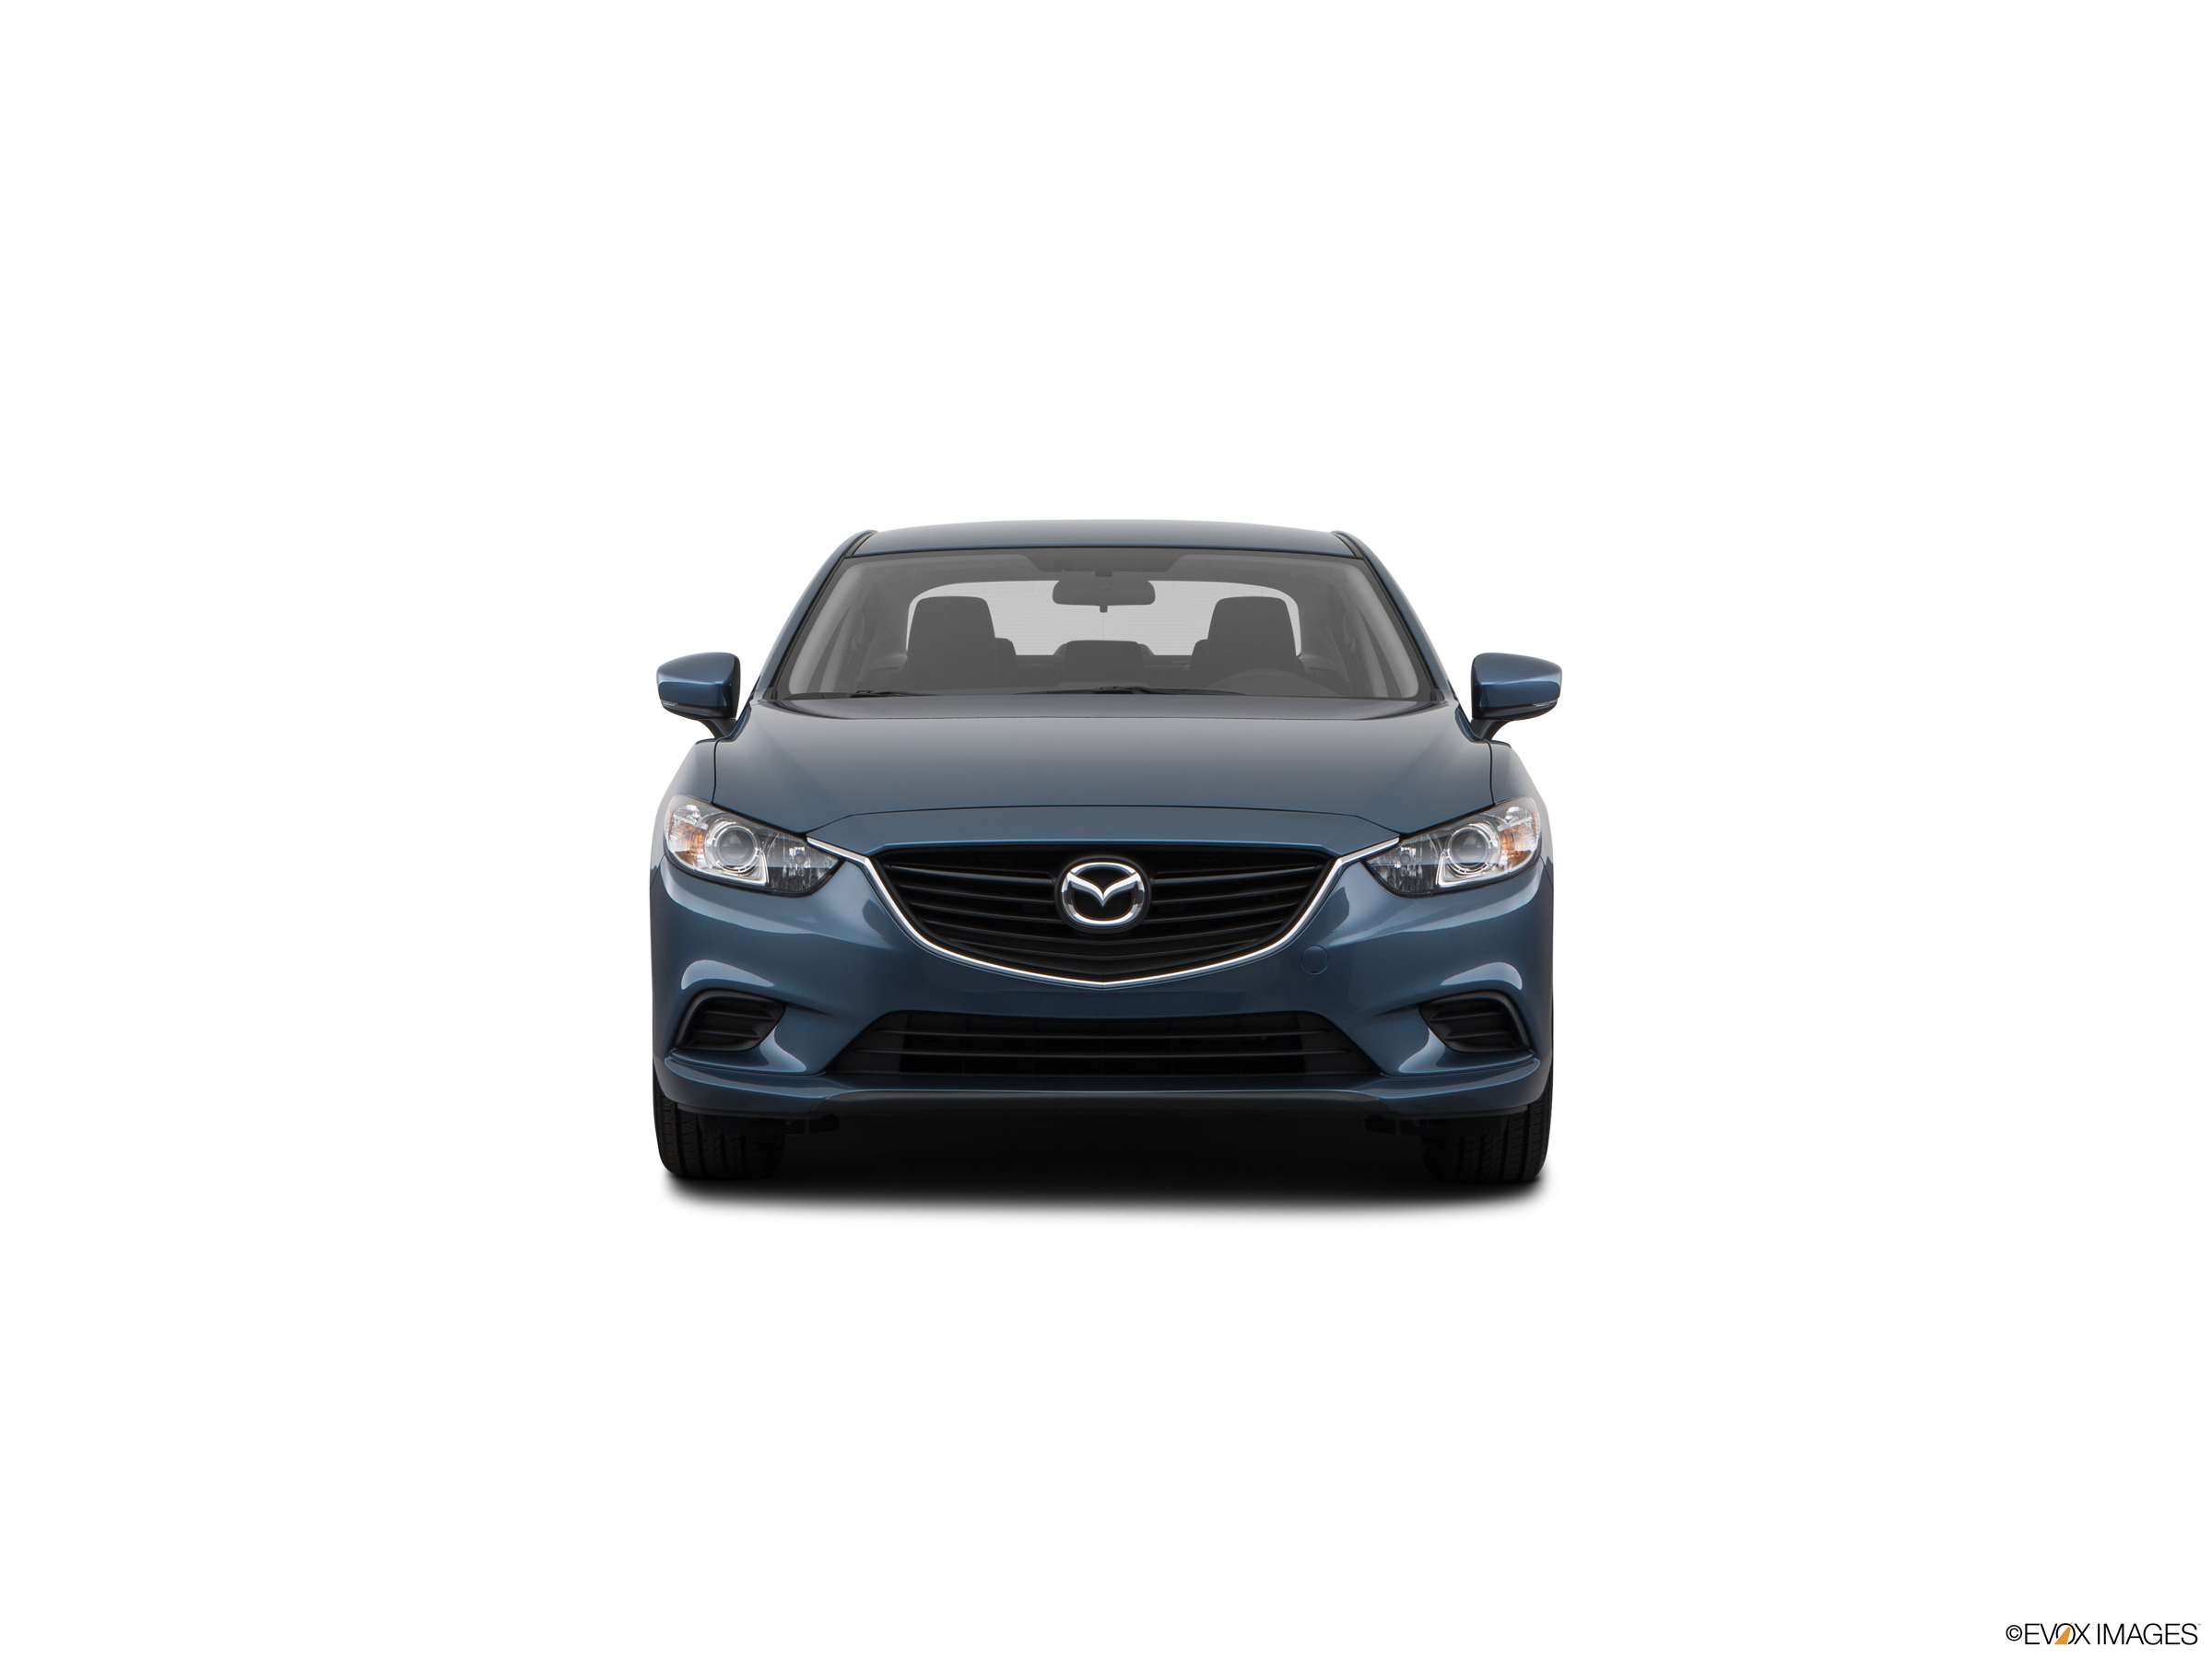 2017 Mazda Mazda6 Values & Cars For Sale | Kelley Blue Book